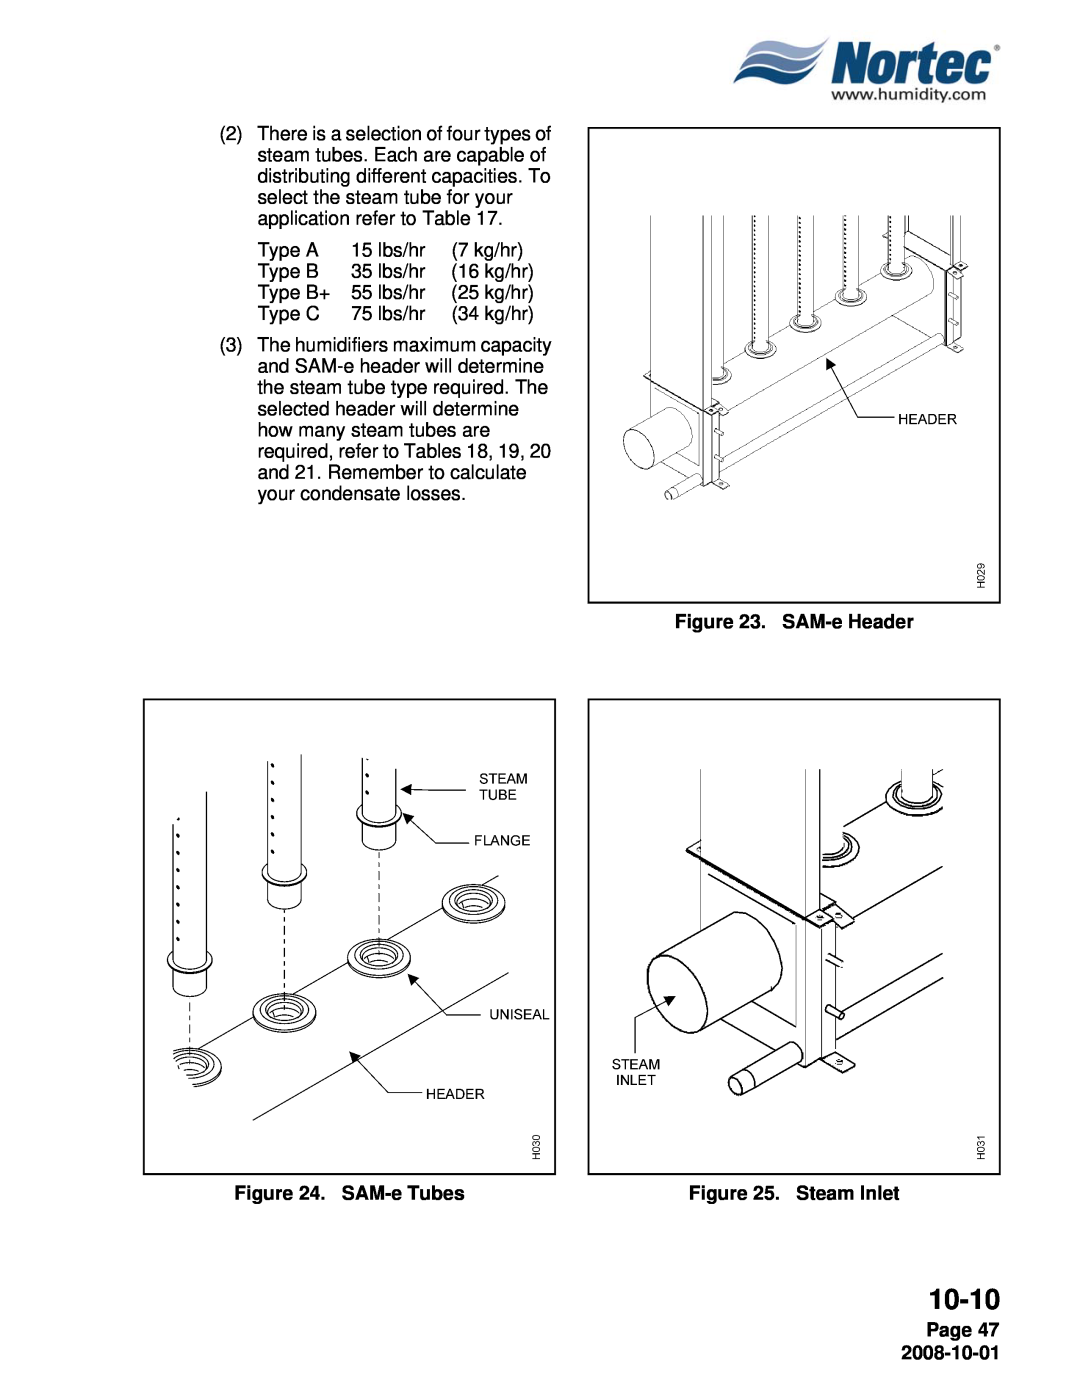 Nortec NHTC, NHPC manual 10-10, SAM-eHeader, SAM-eTubes, Steam Inlet, Page 